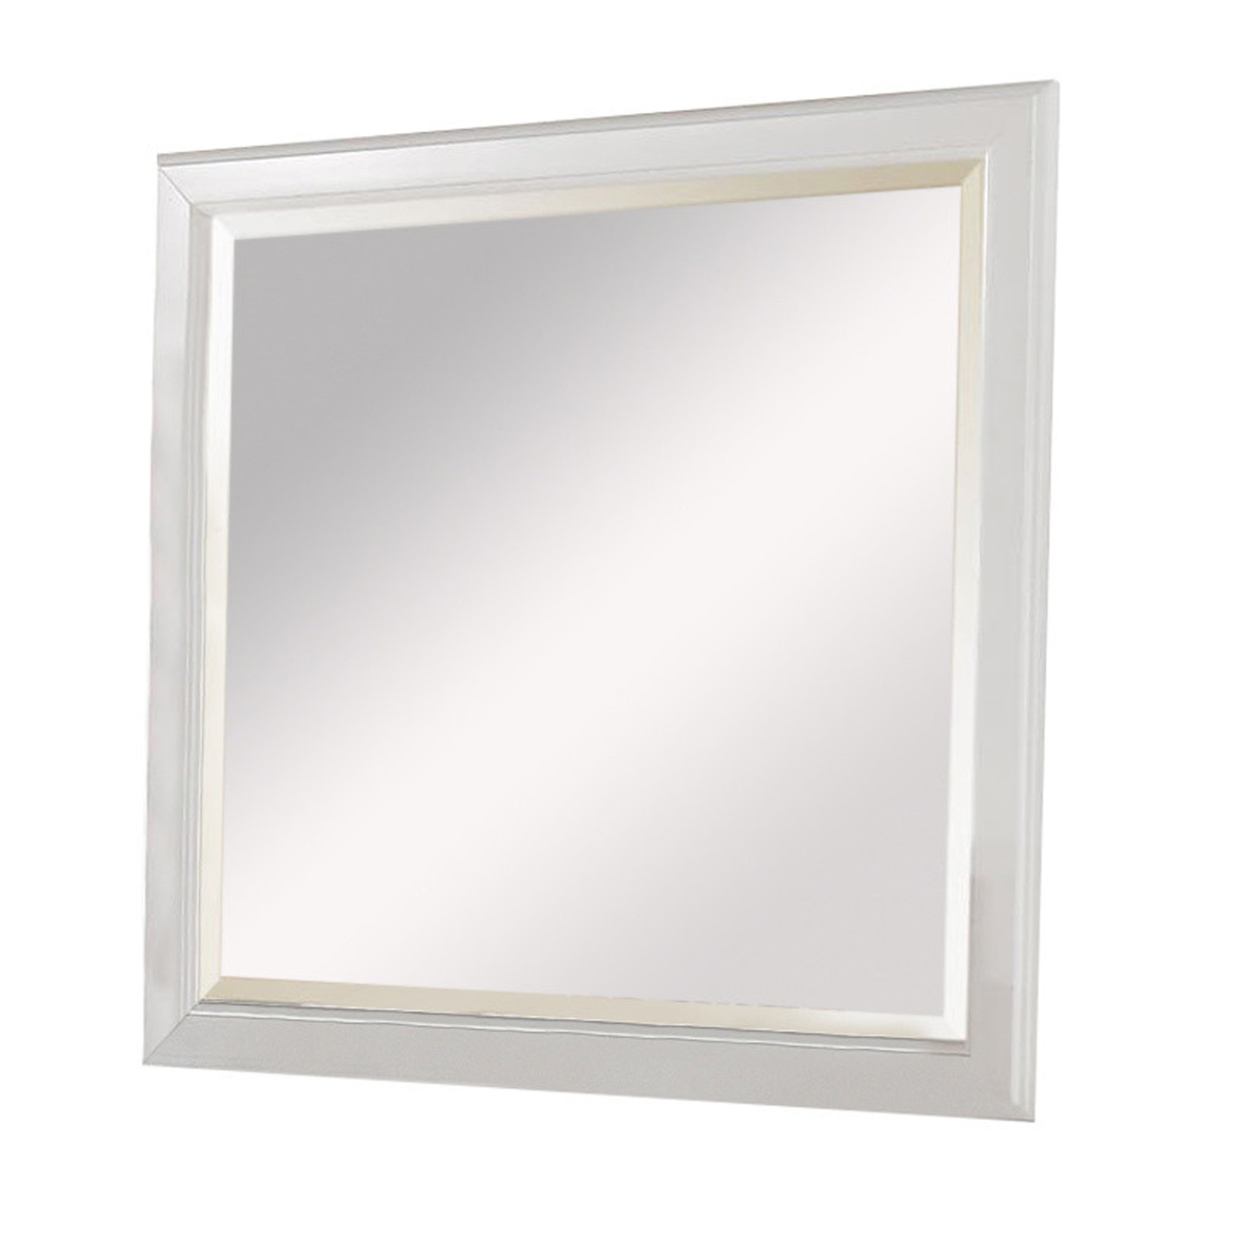 Wall Mirror With Rectangular Frame And Raised Edges, White- Saltoro Sherpi